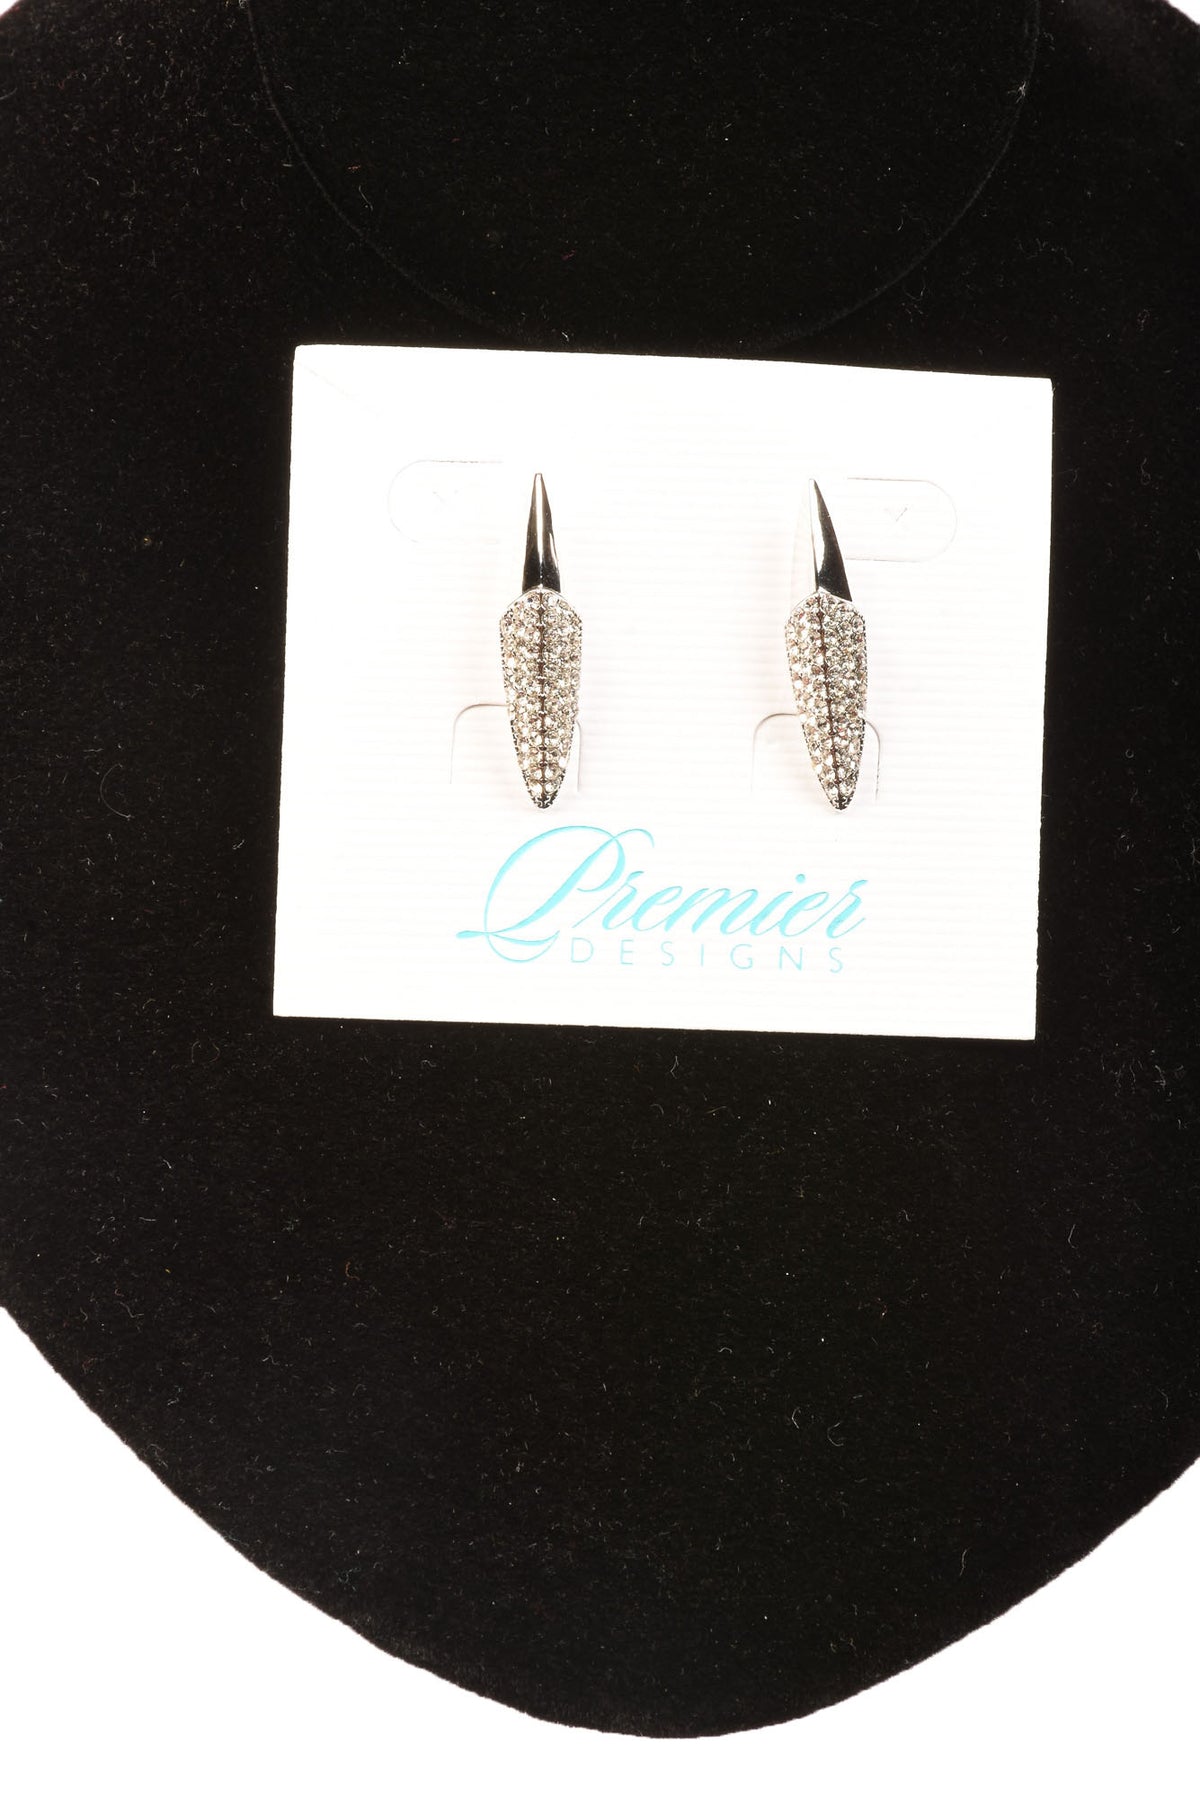 Premier Designs Earrings